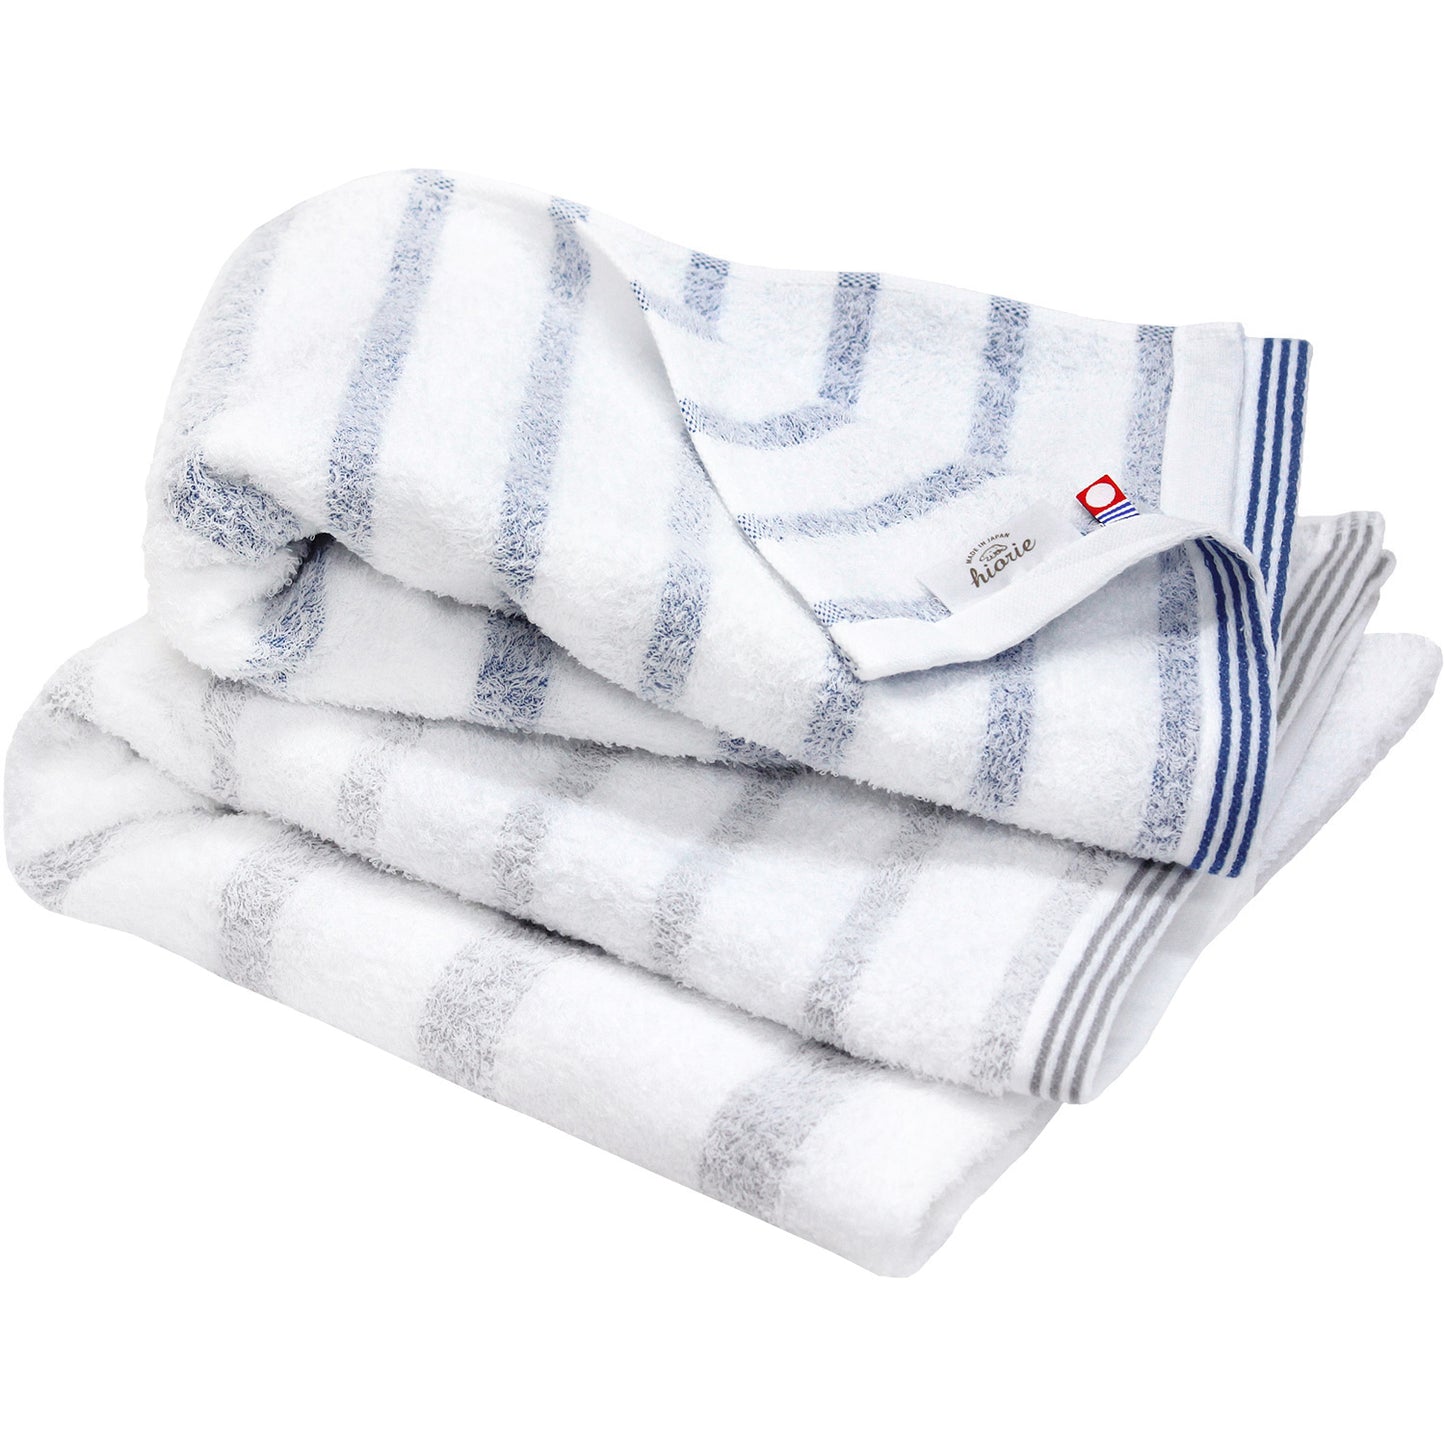 Hiorie Imabari Mist Border Fast Drying Bath Towel 2 Sheets 100% cotton Japan